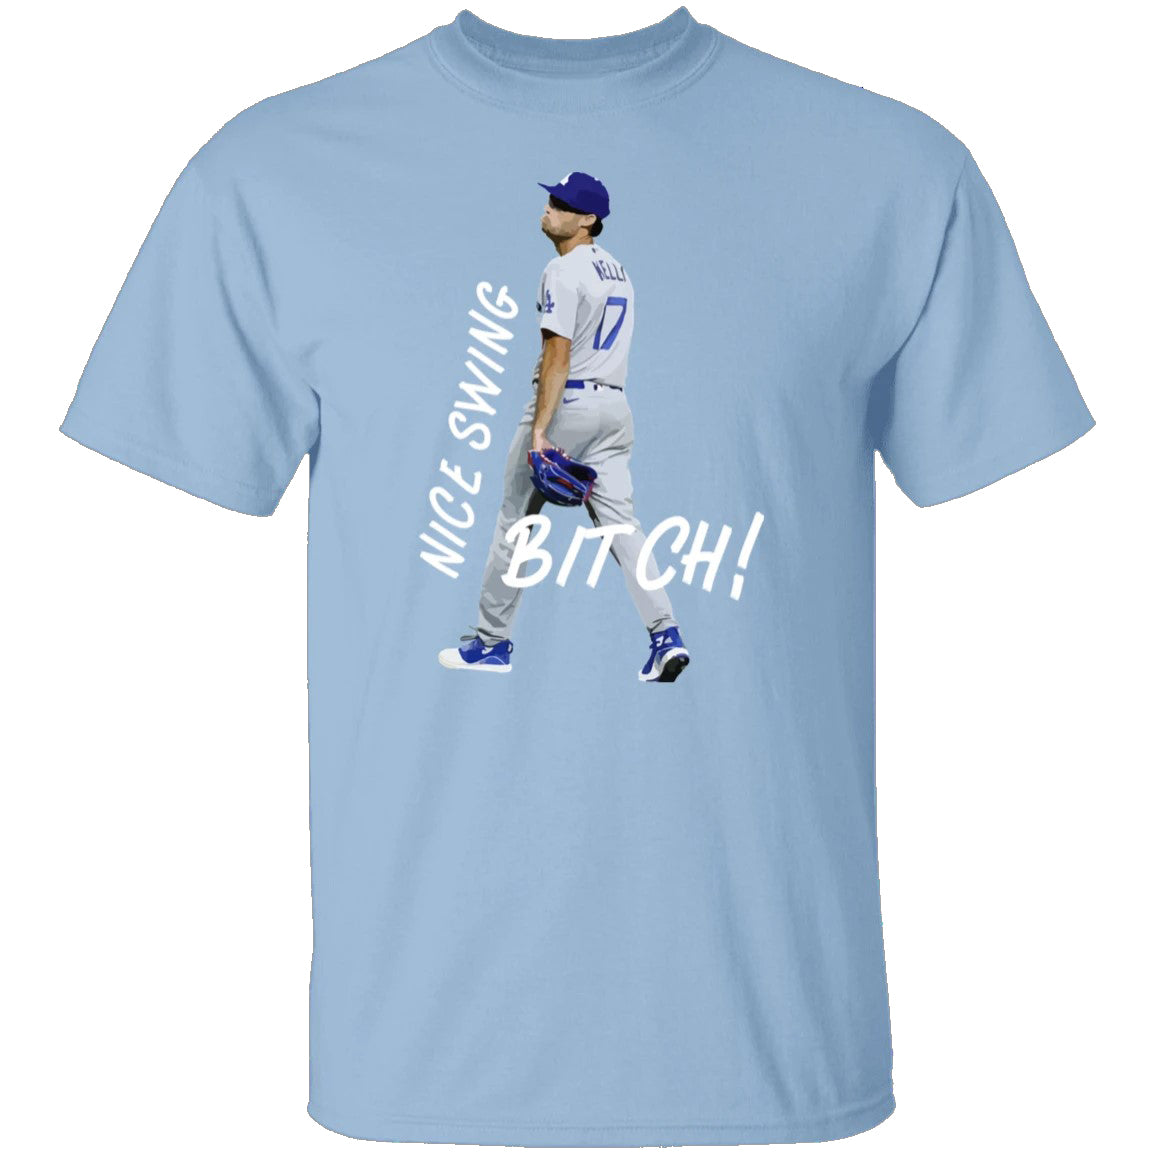 LaLaLandTshirts Joe Kelly Nice Swing Bitch Big Face Los Angeles Baseball Fan T Shirt Classic / White / Large